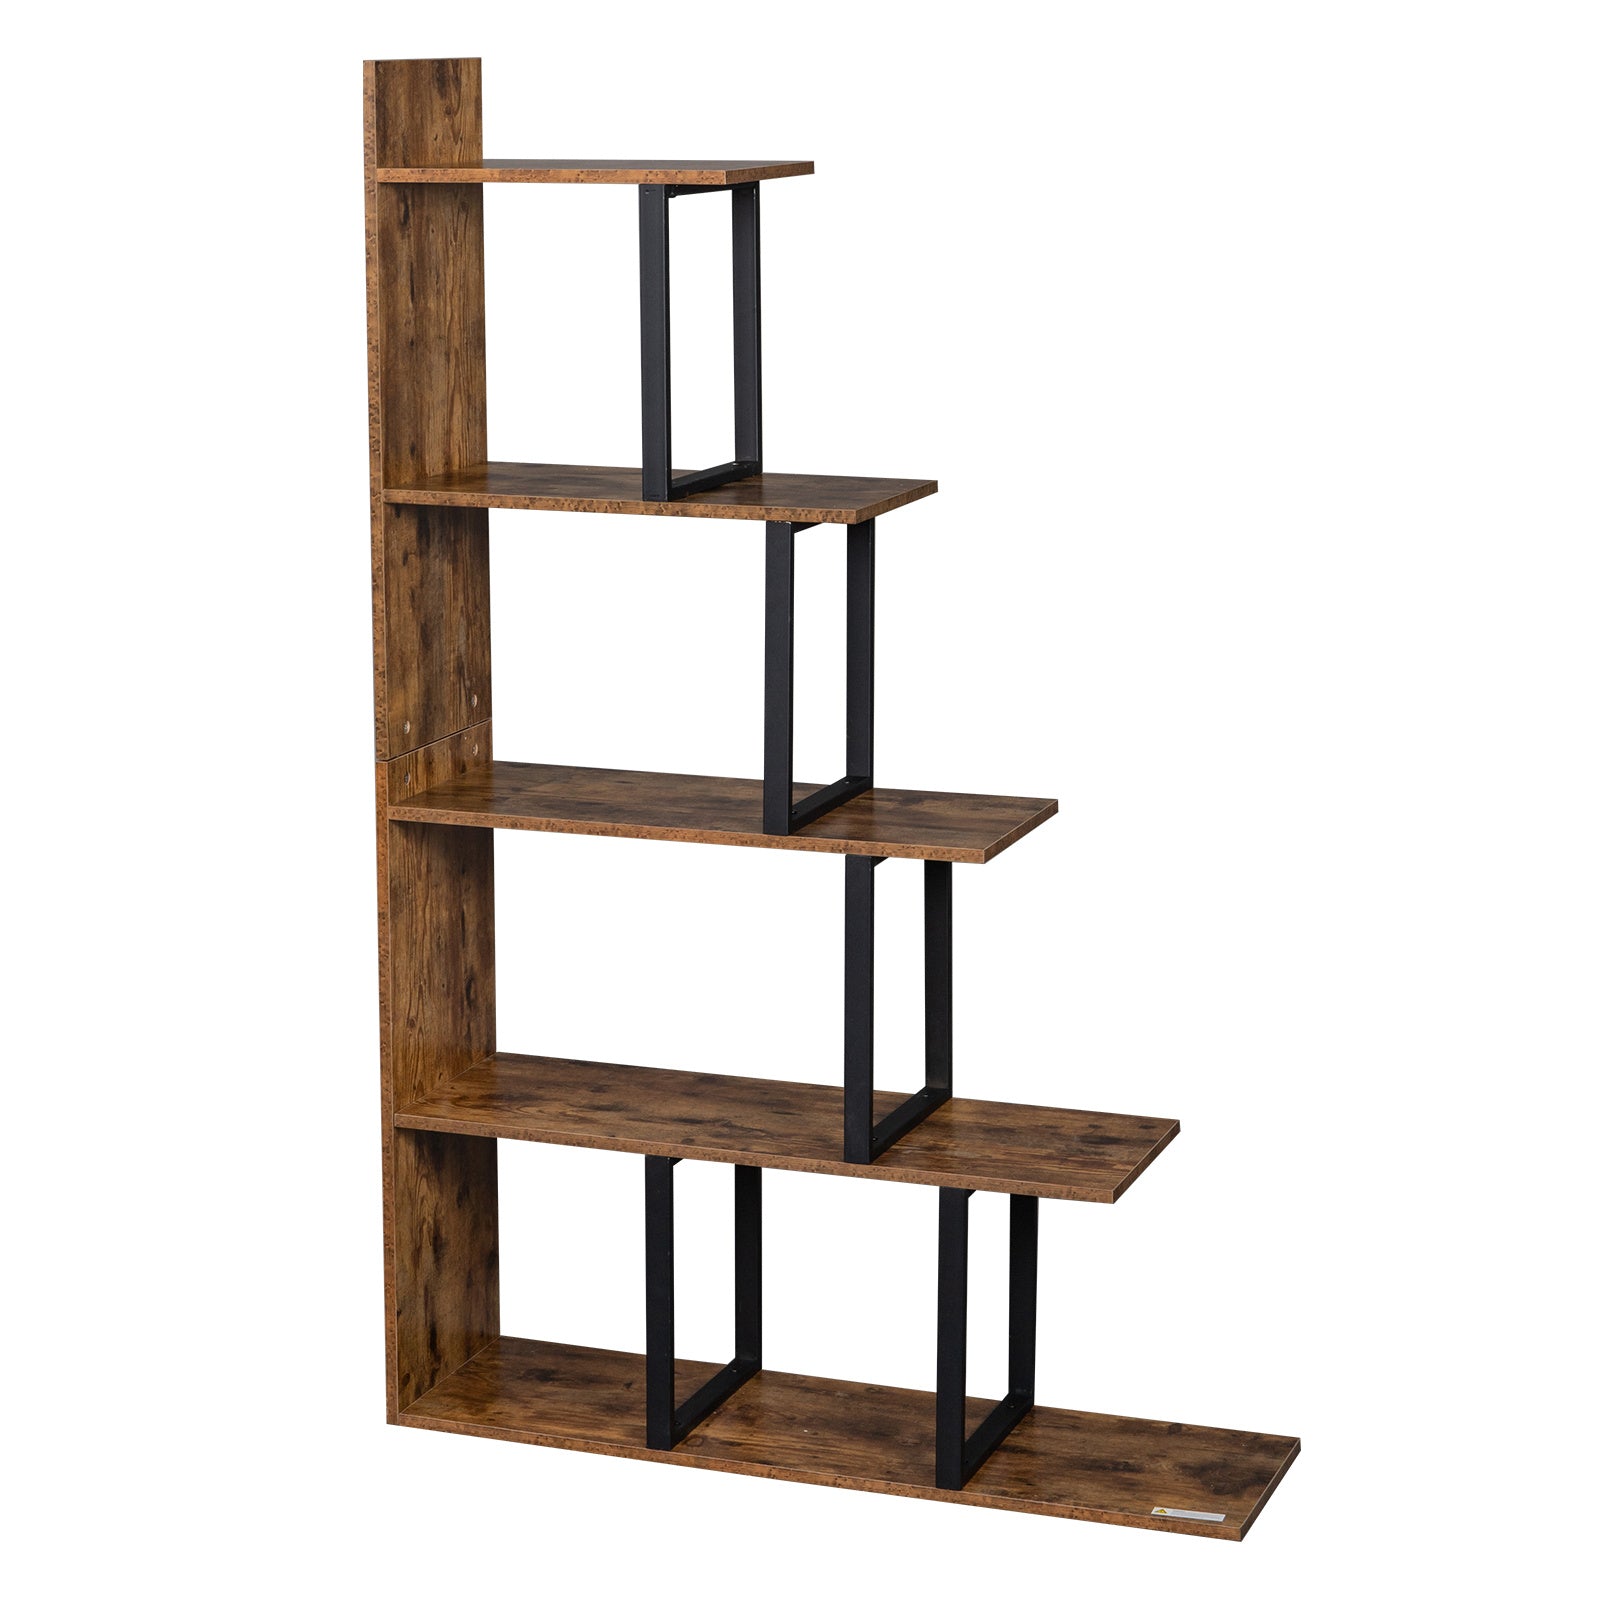 Wooden 5-Tier Bookshelf, Industrial Vintage Freestanding Bookcase Multipurpose Storage Display Rack, Wood Look Accent Metal Organizer Frame for Living Room Home Office RT